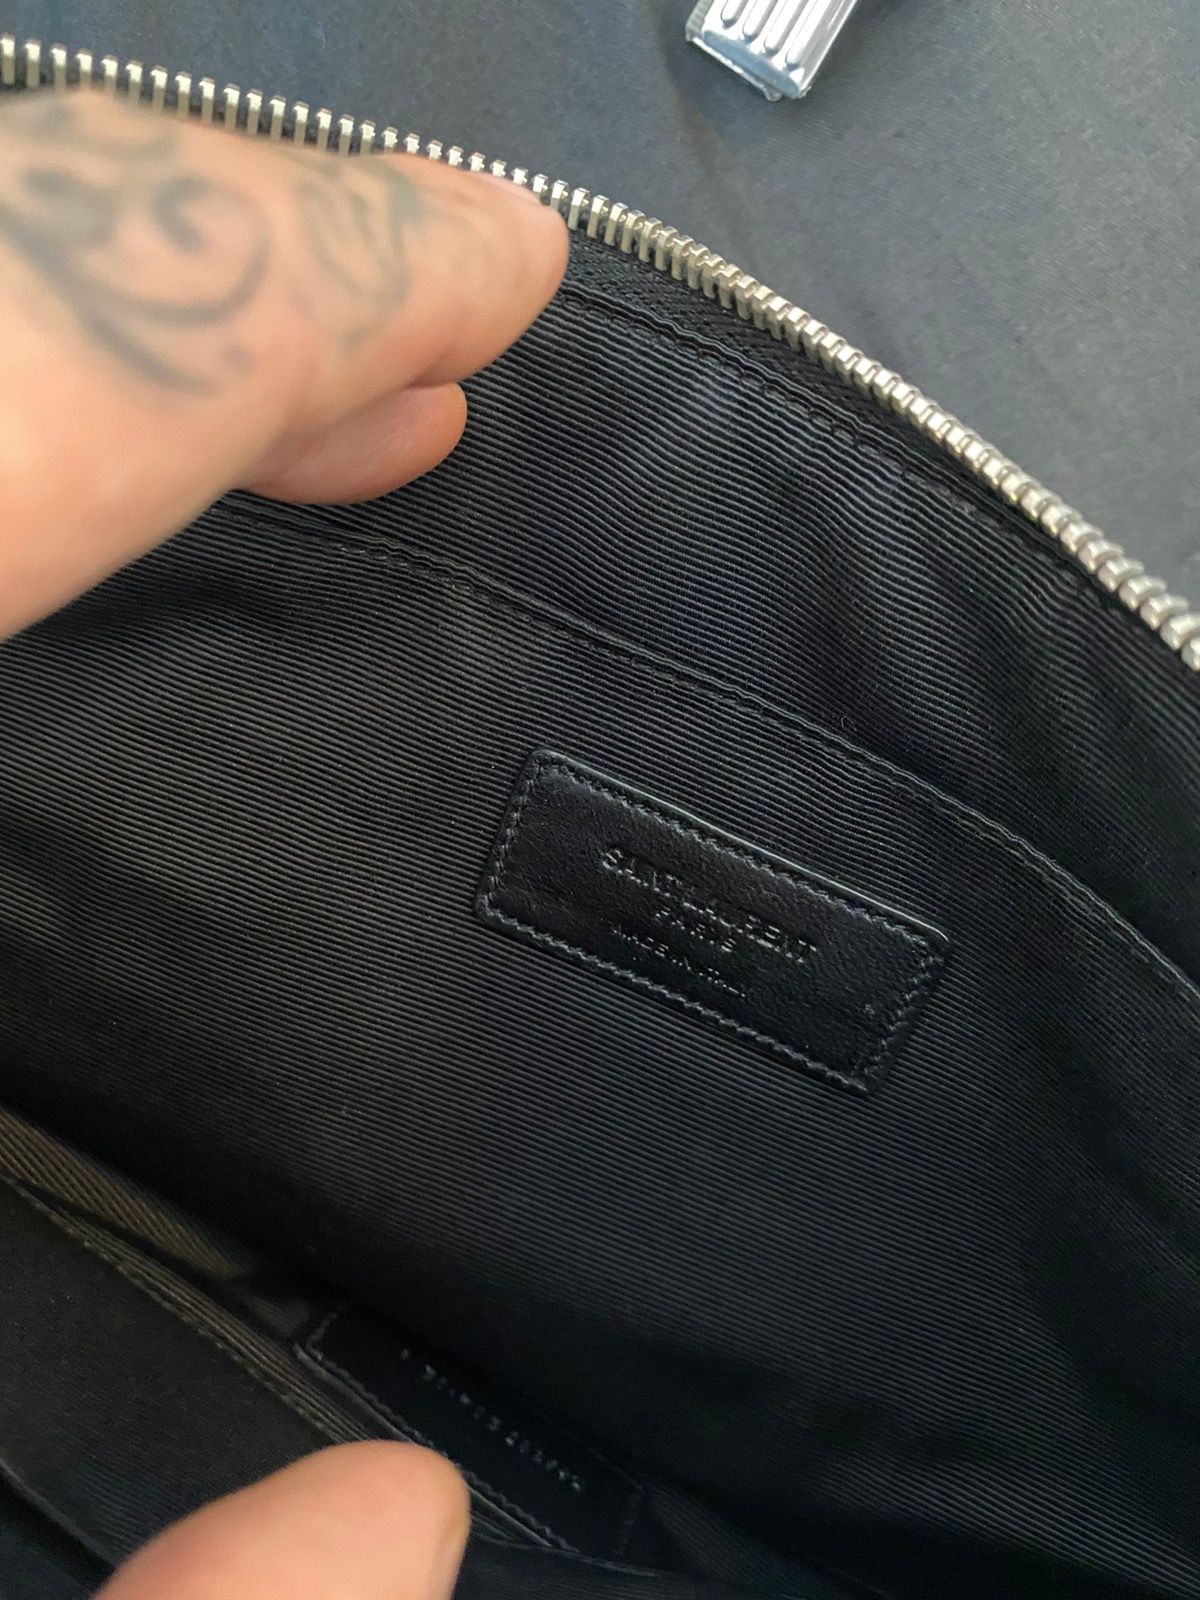 SS16 Surf Sound Leather Damier Checkered Zipper Bag